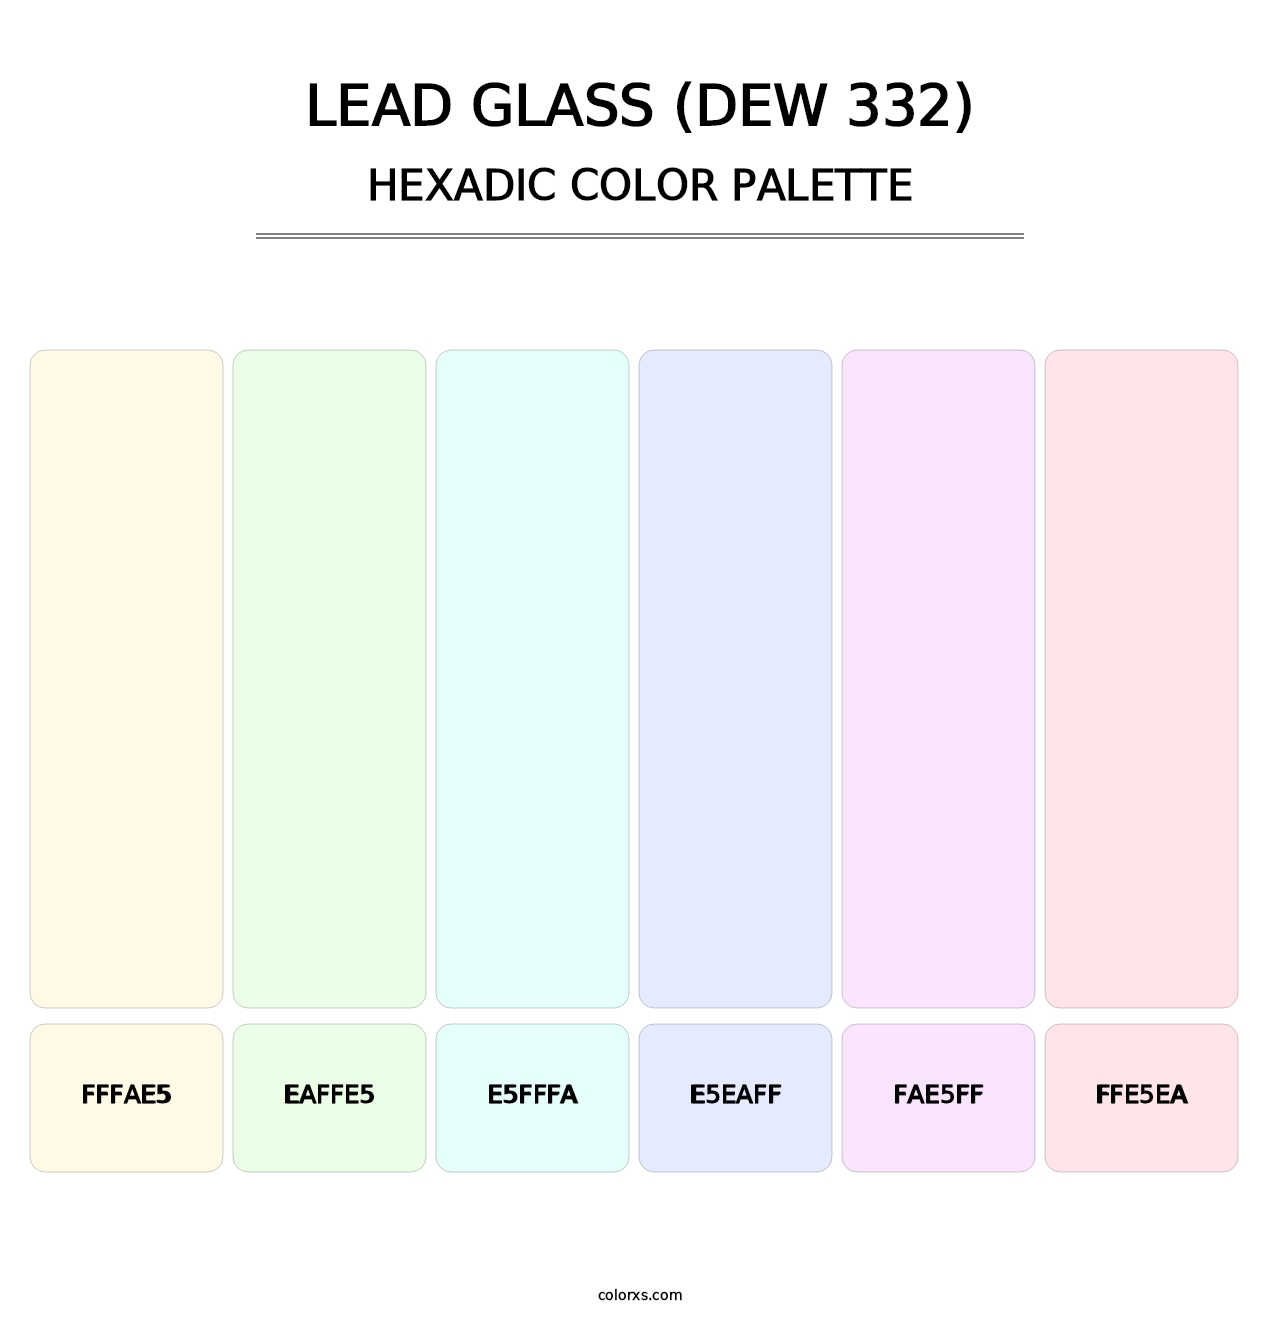 Lead Glass (DEW 332) - Hexadic Color Palette